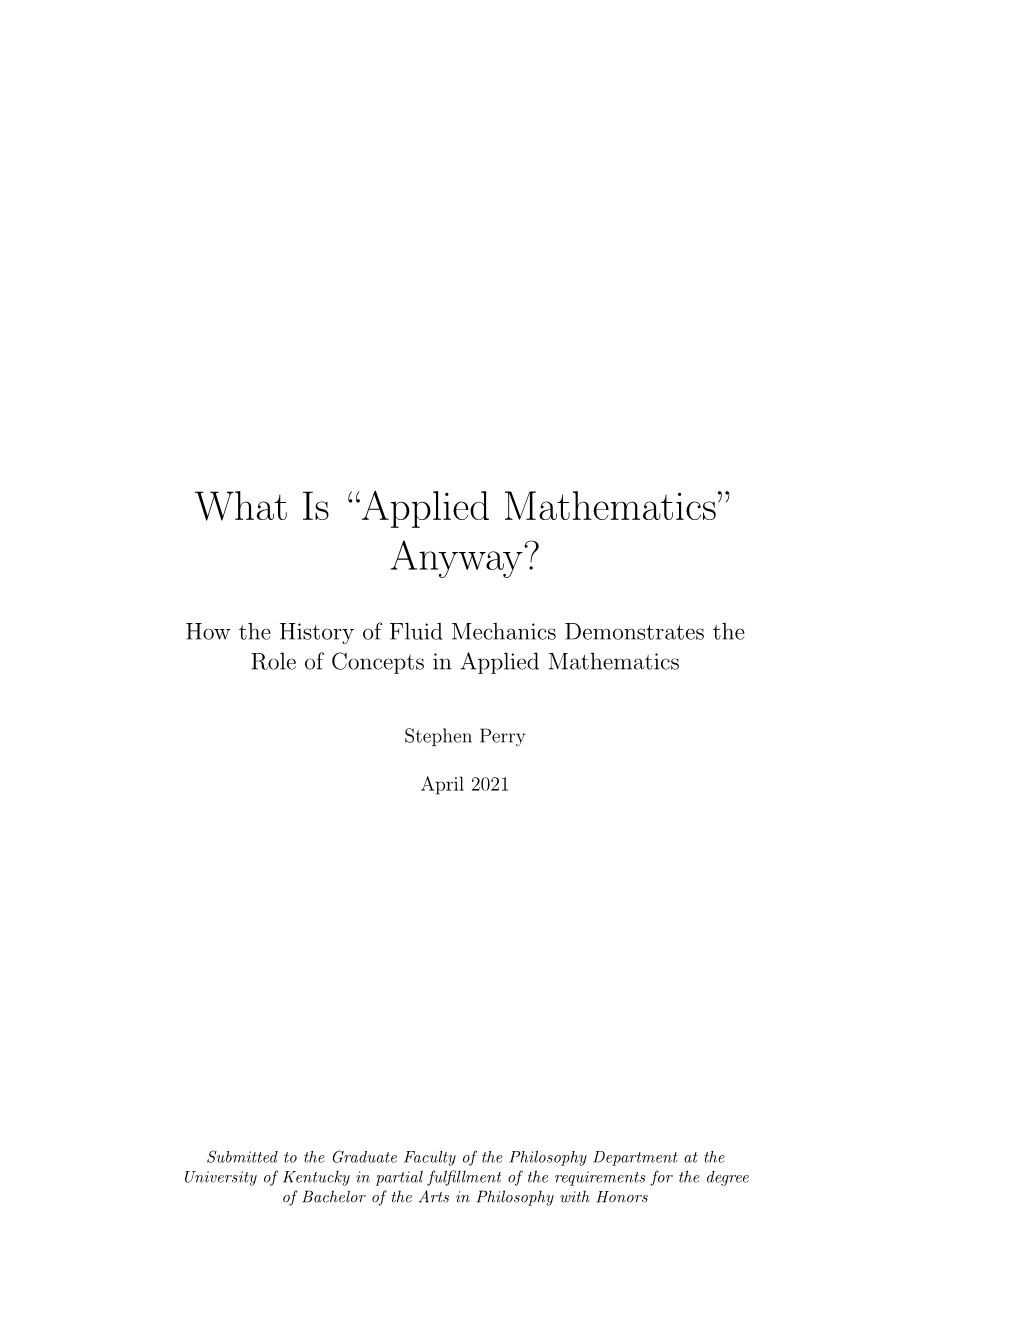 Applied Mathematics” Anyway?